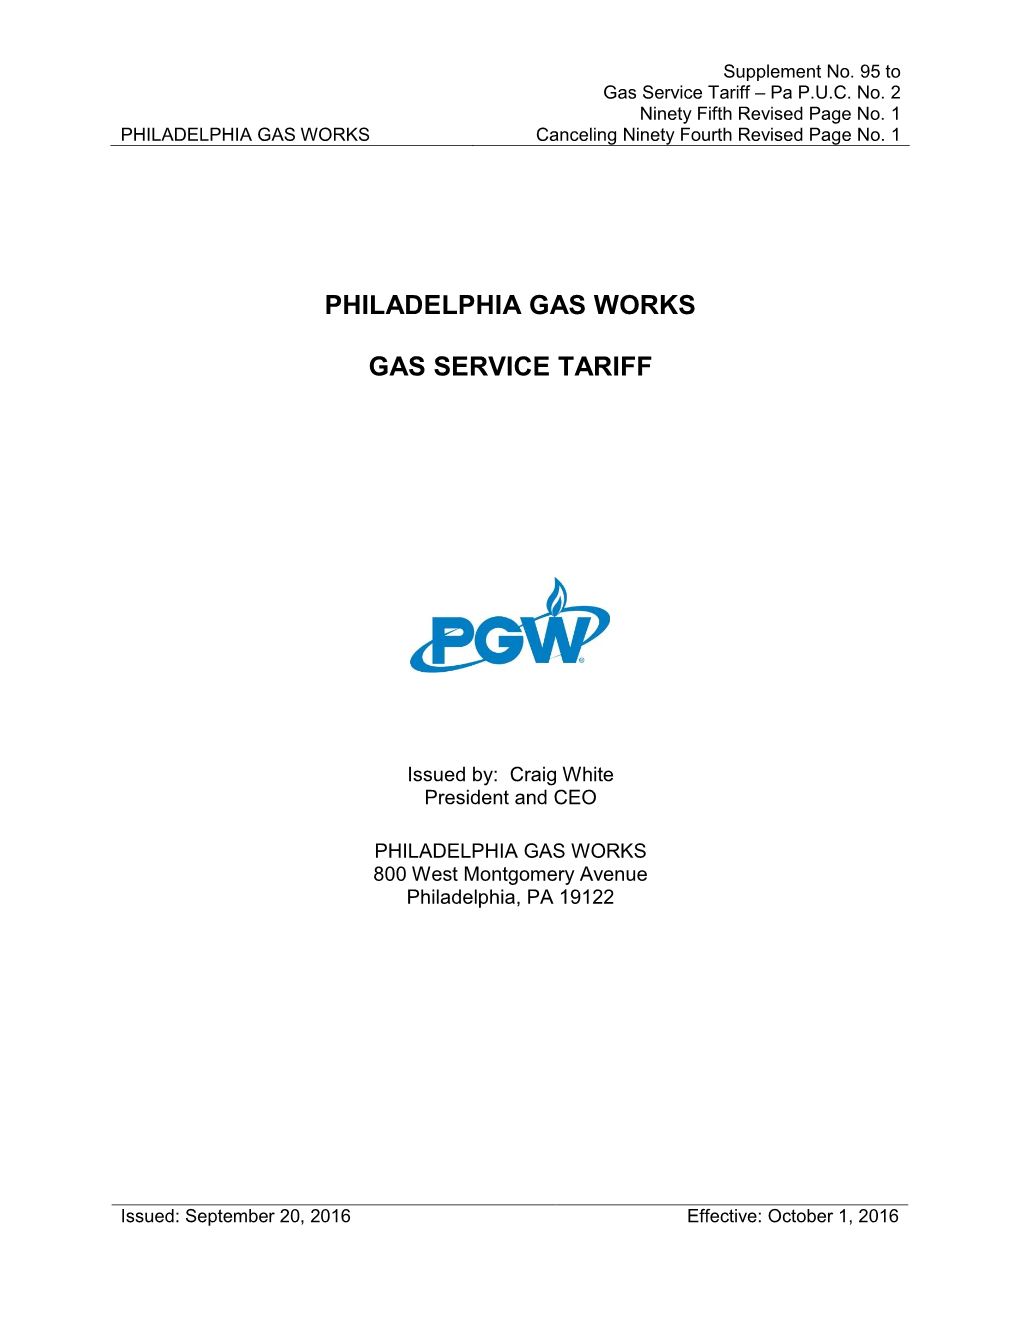 Philadelphia Gas Works Gas Service Tariff